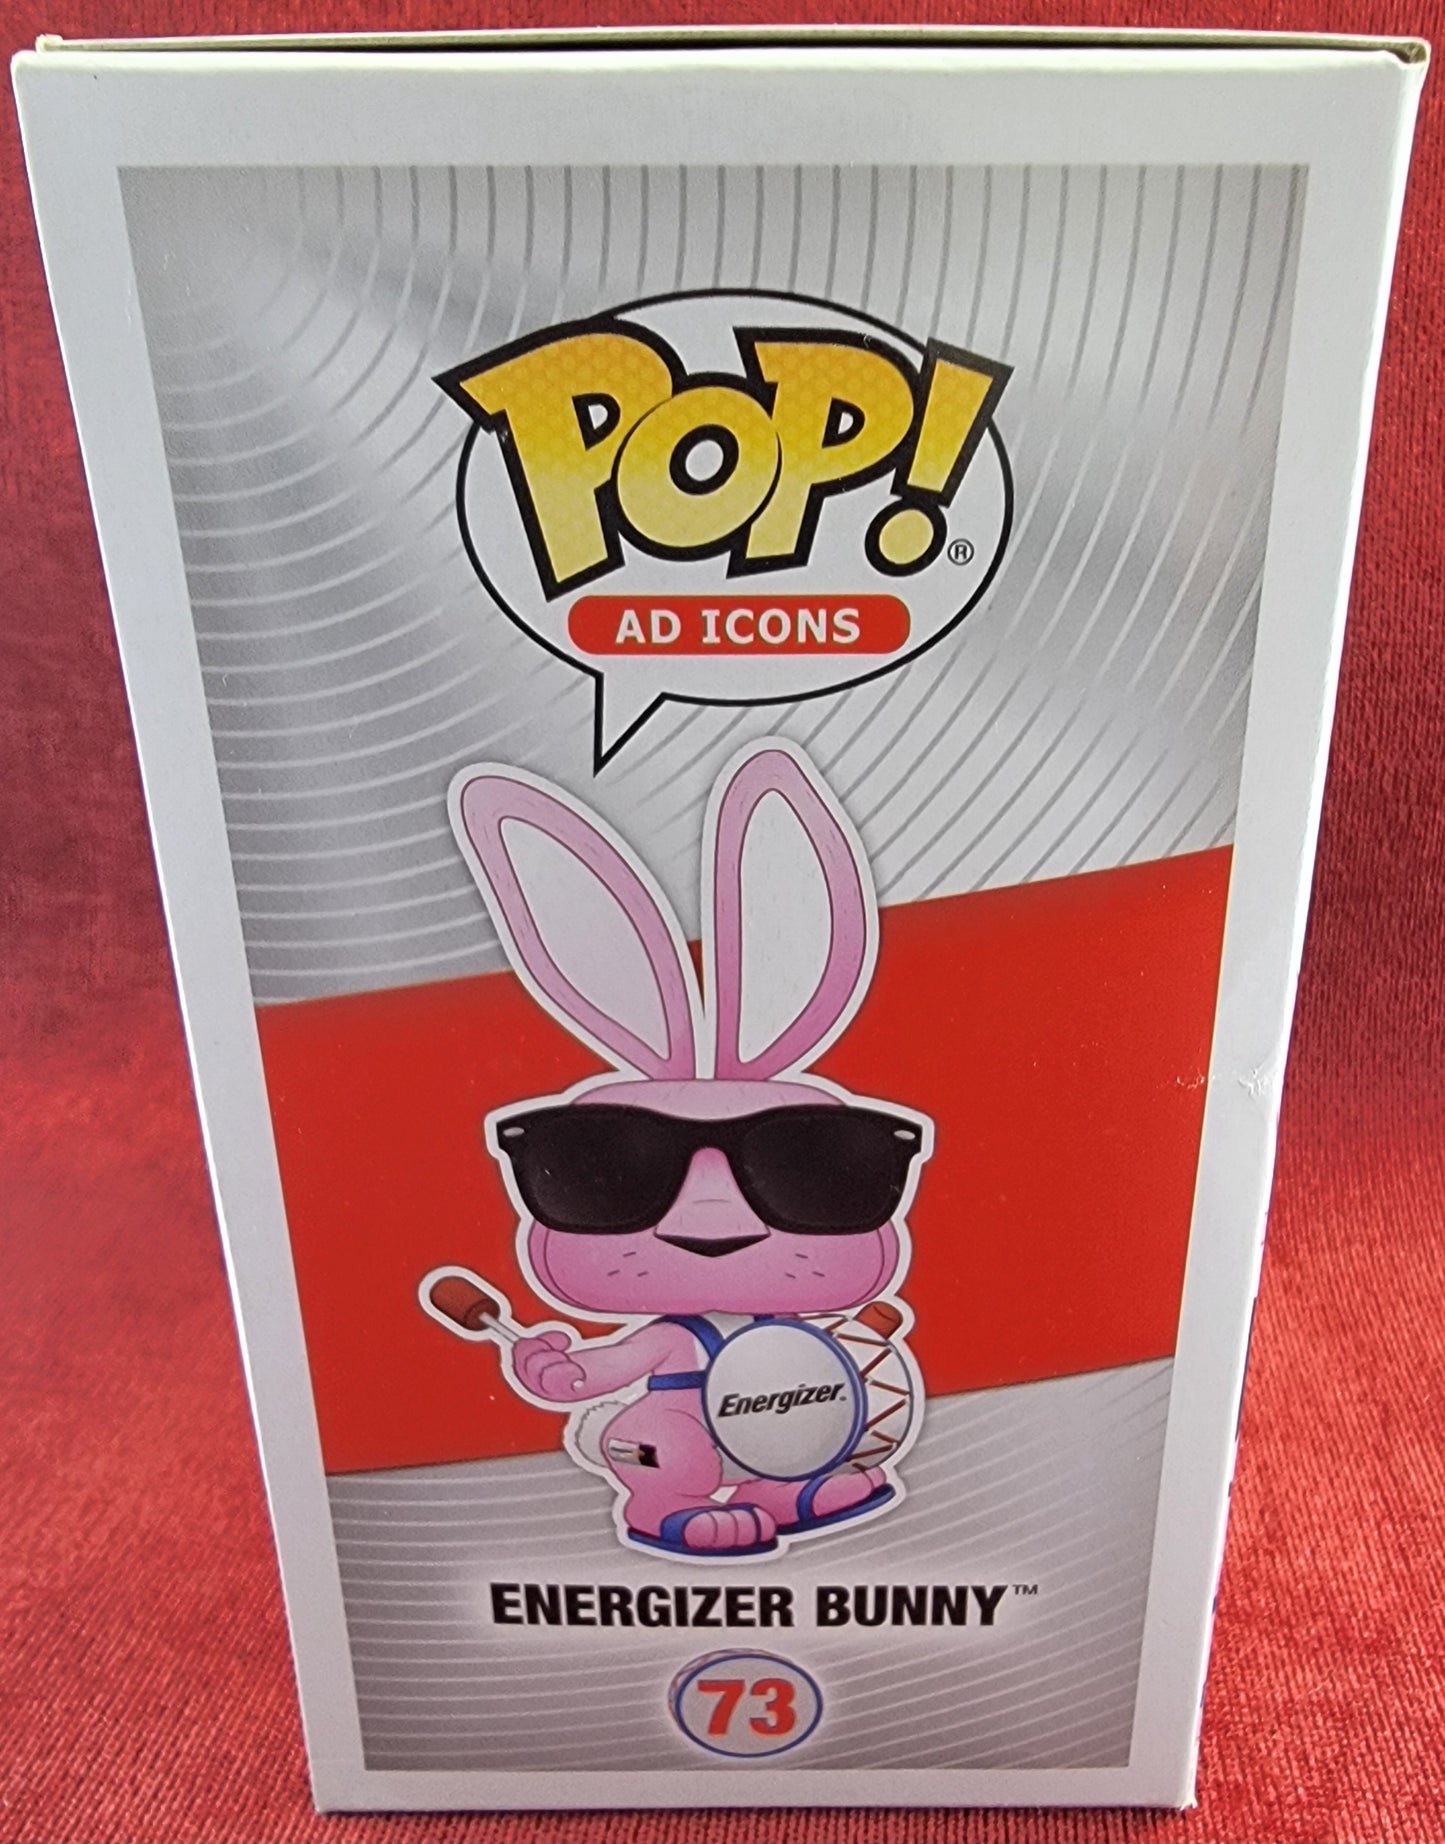 Energizer bunny target exclusive funko # 73 (nib)
With pop protector